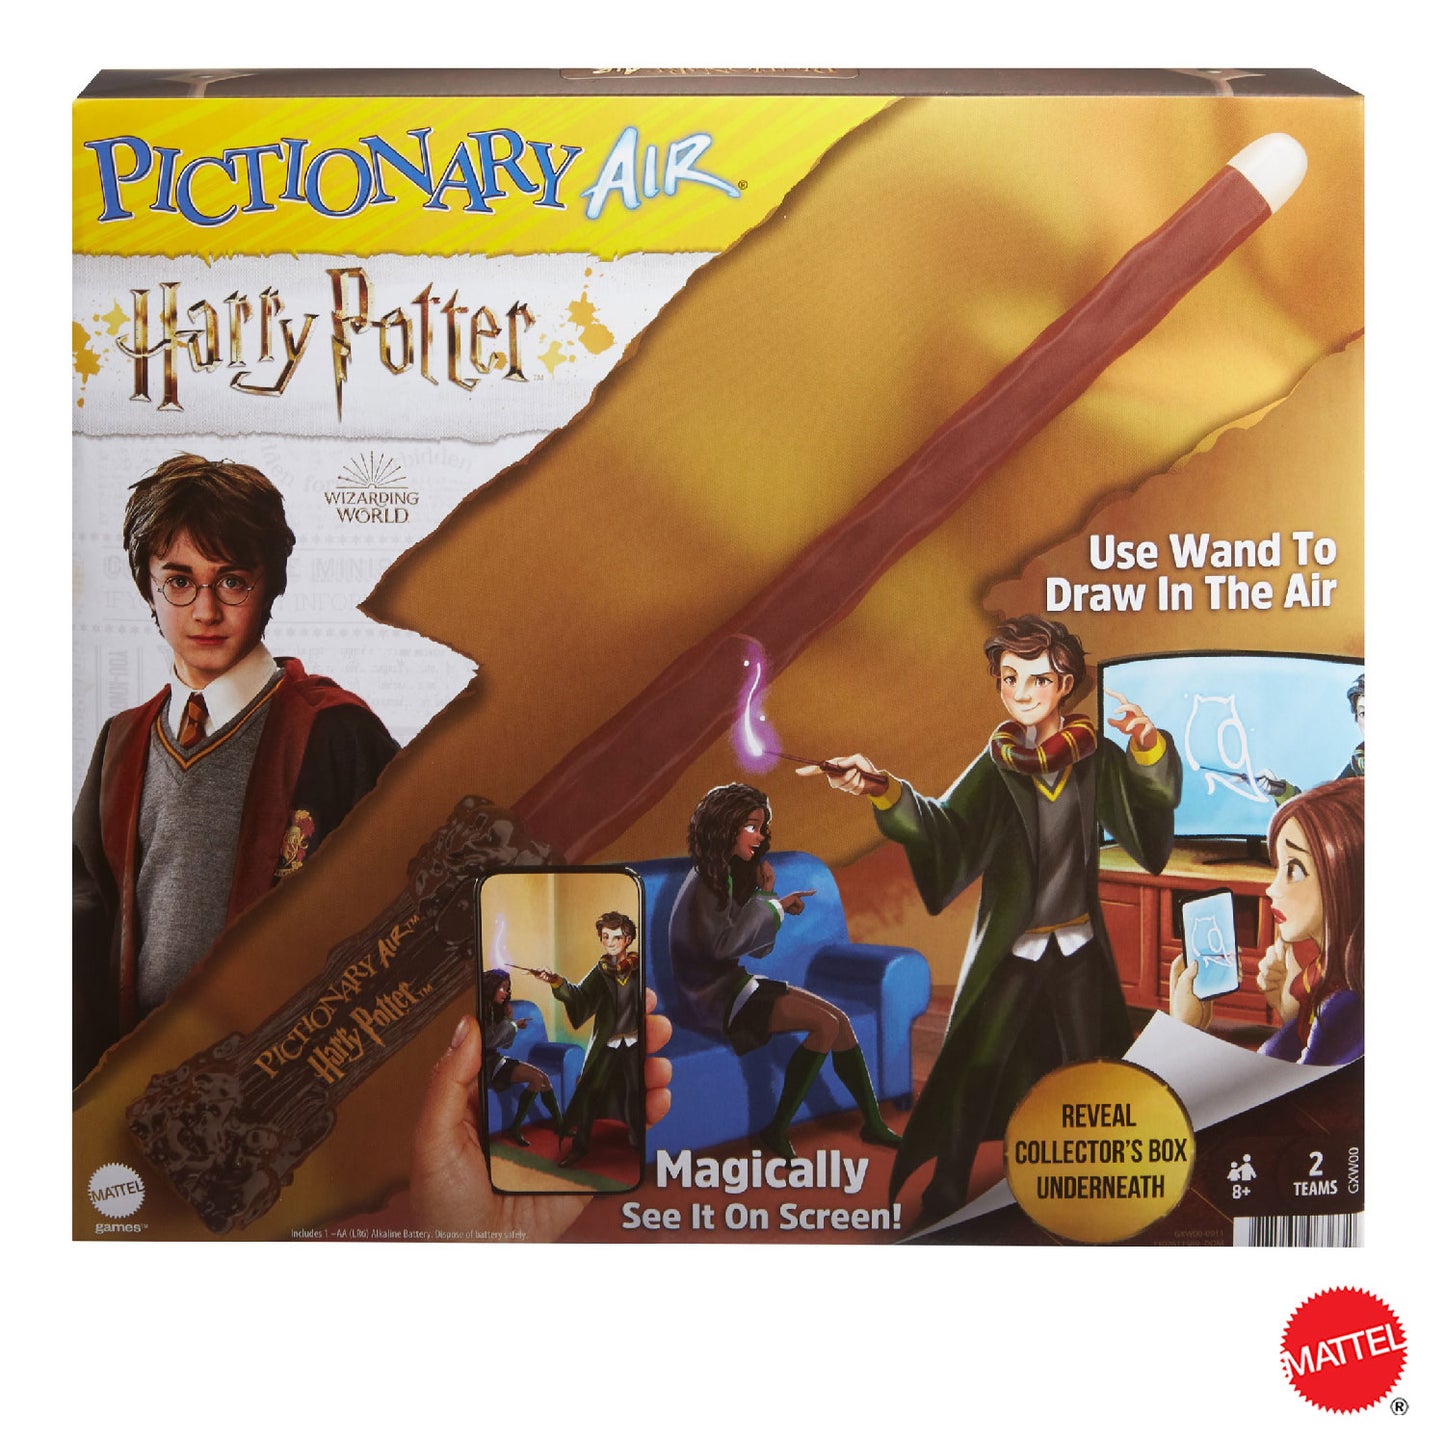 Mattel - Pictionary Air Harry Potter HDC63